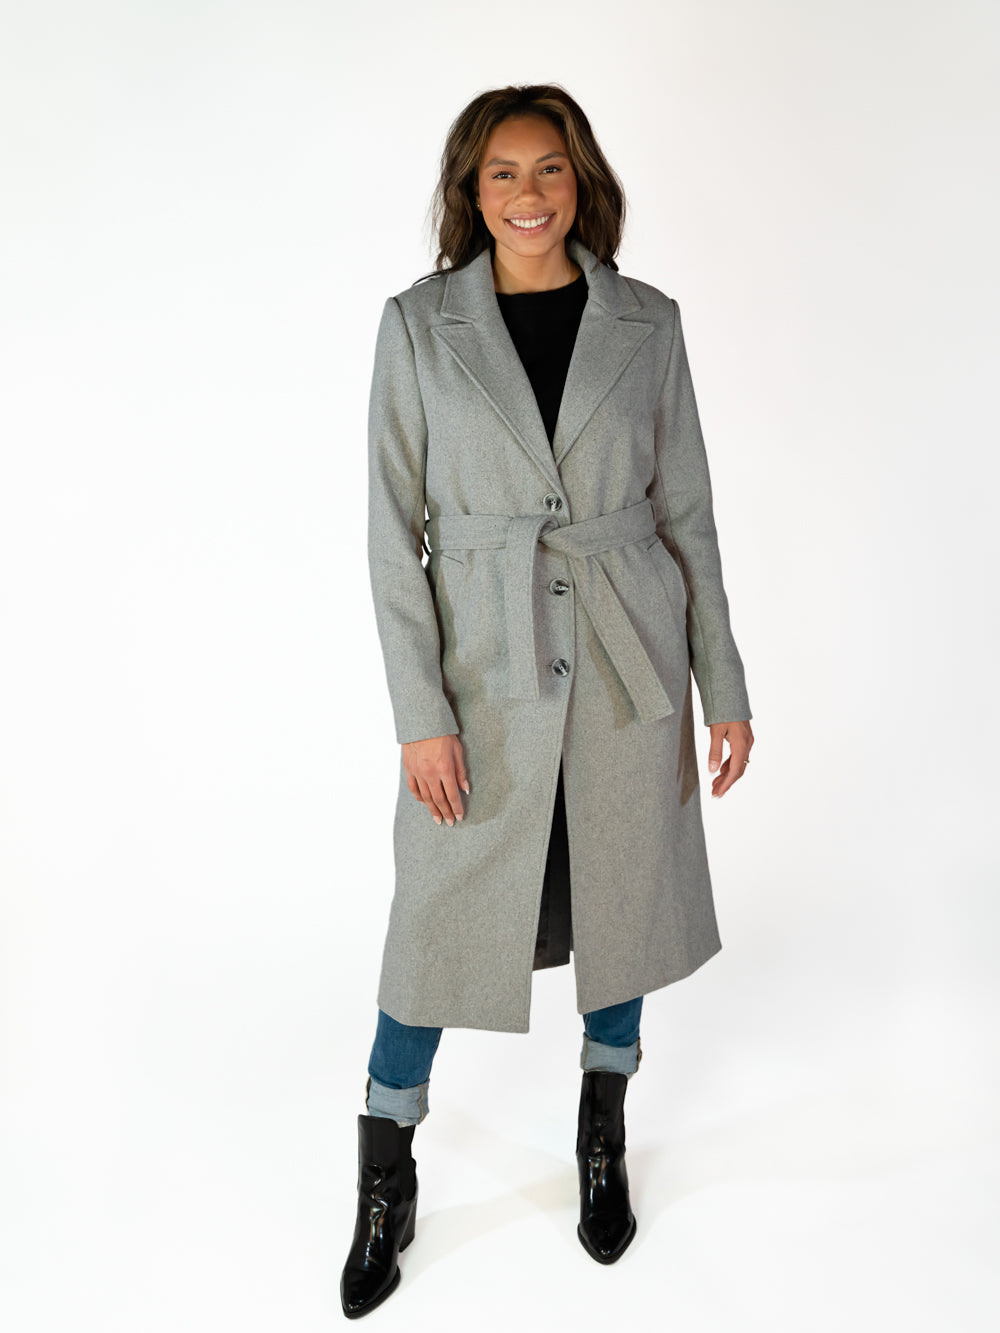 Belted Wool Blend Dress Coat for Tall Women - Amalli Talli